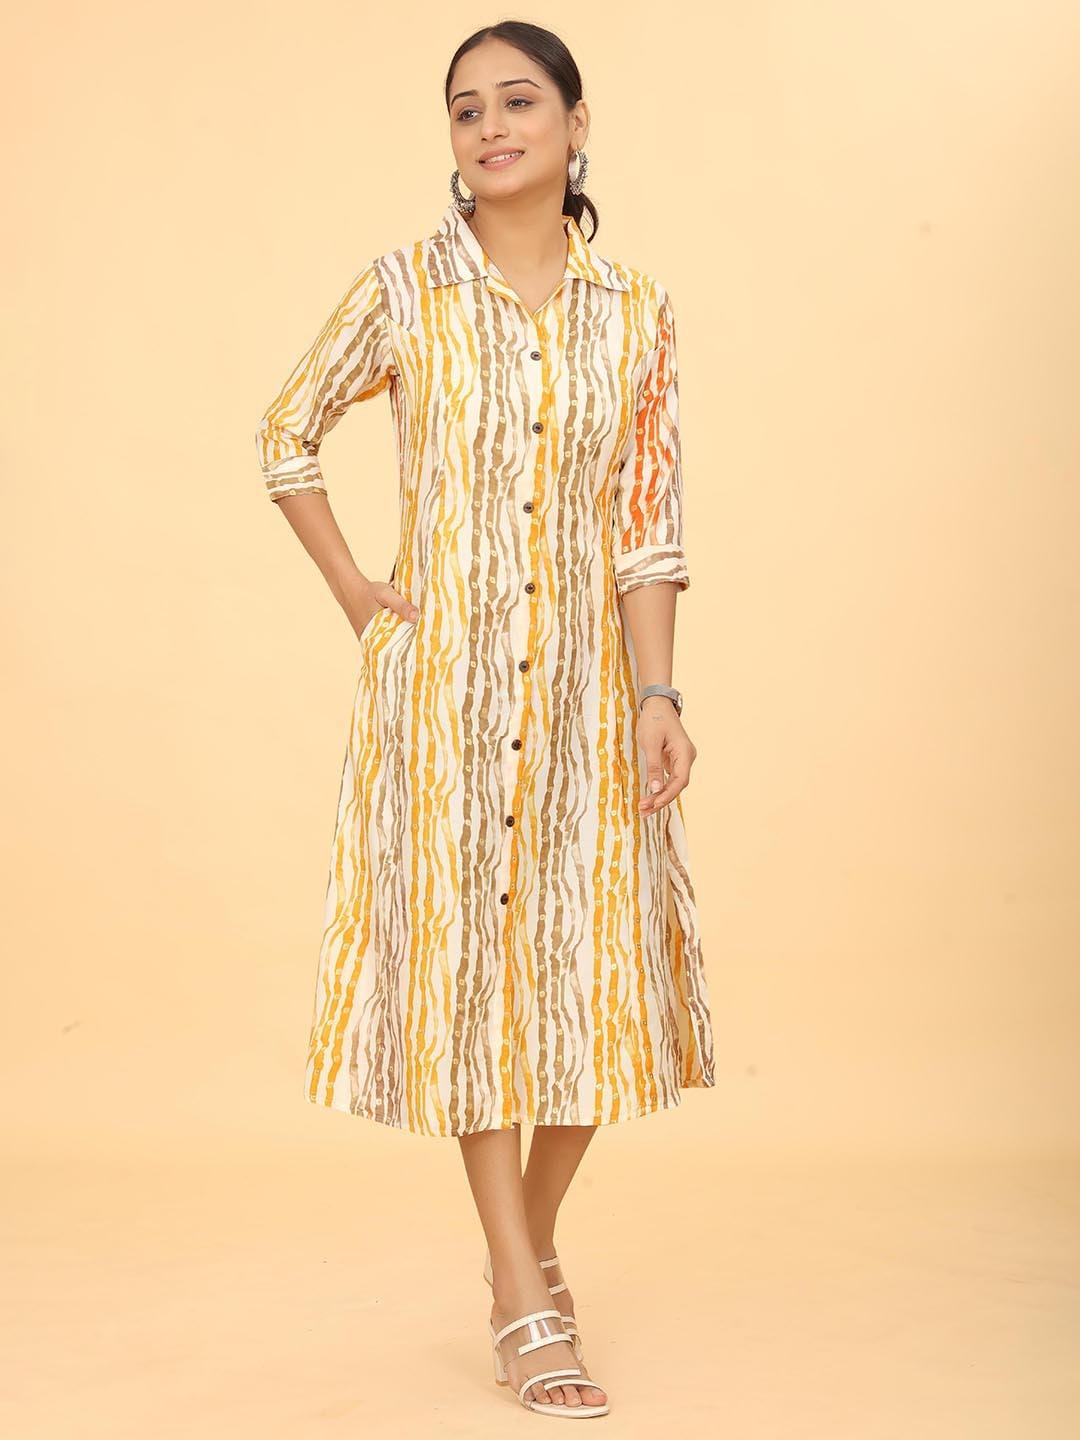 kesudi striped shirt collar three-quarter sleeves cotton shirt midi dress